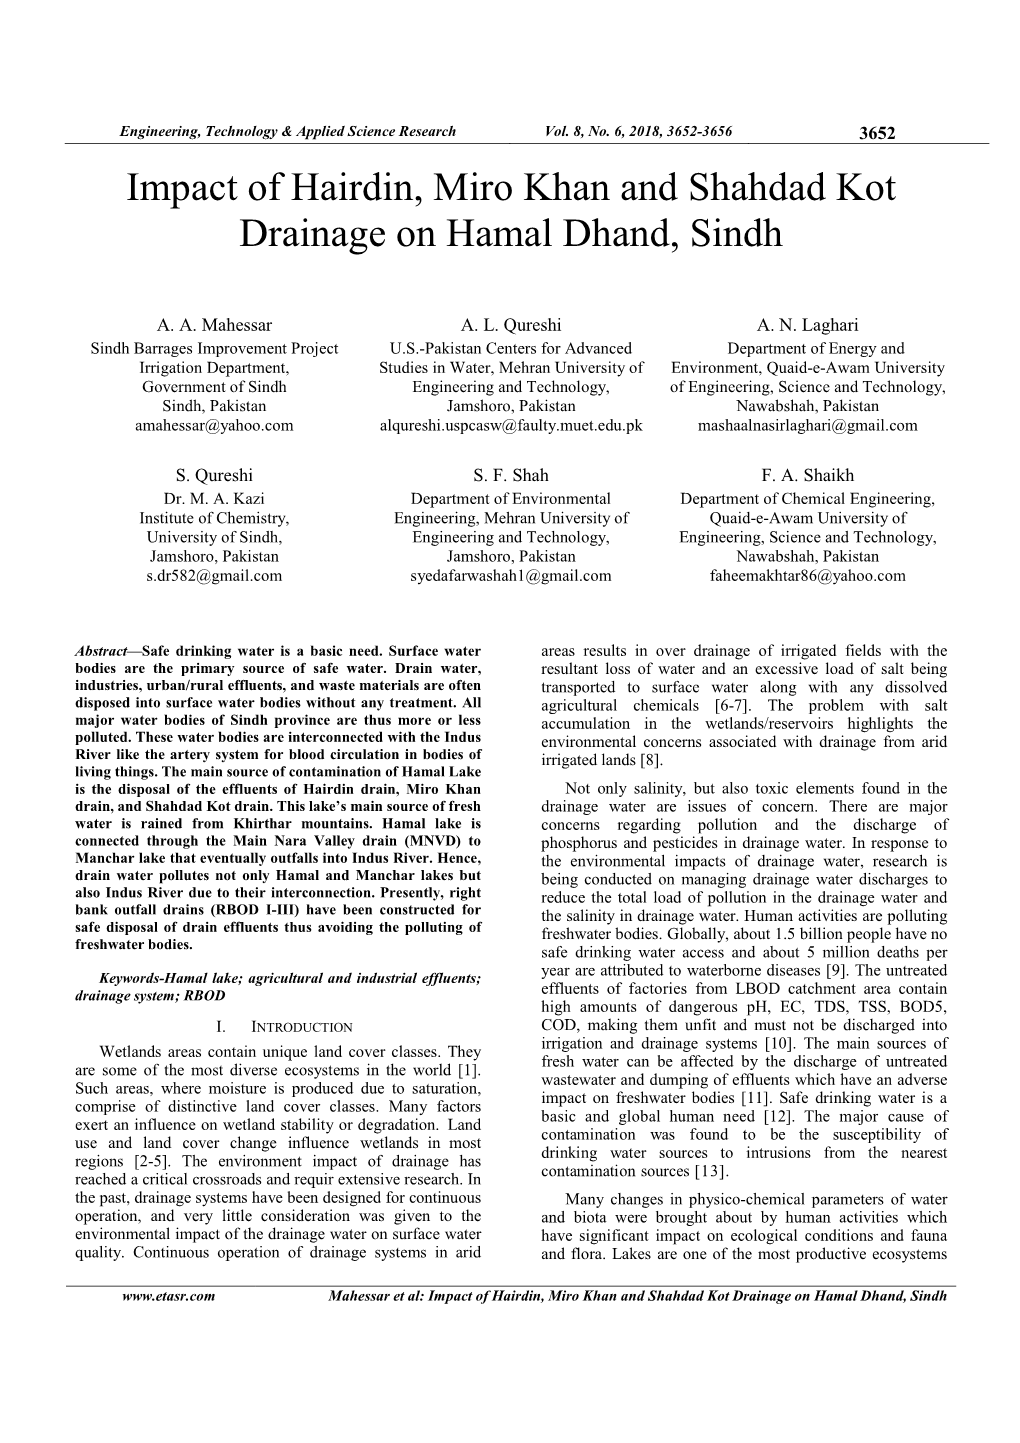 Impact of Hairdin, Miro Khan and Shahdad Kot Drainage on Hamal Dhand, Sindh